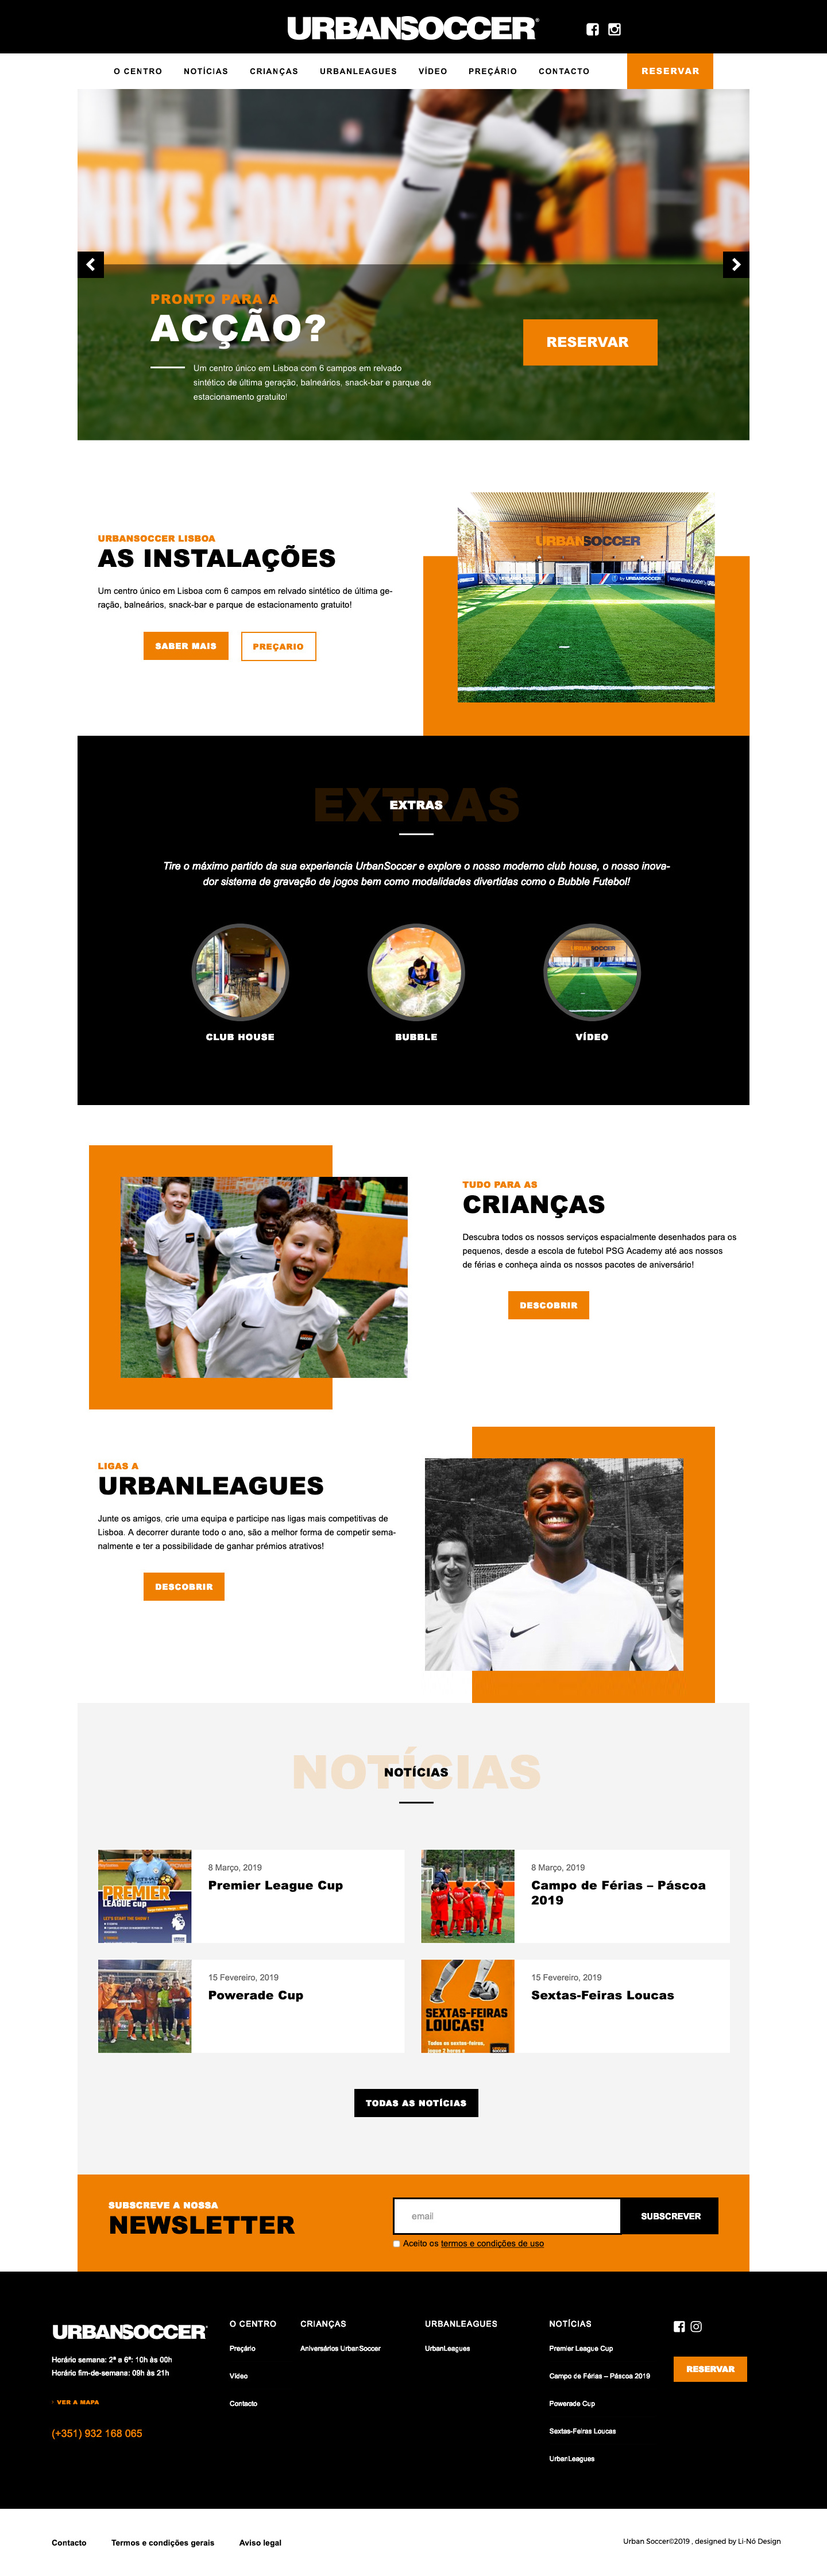 Urban Soccer website